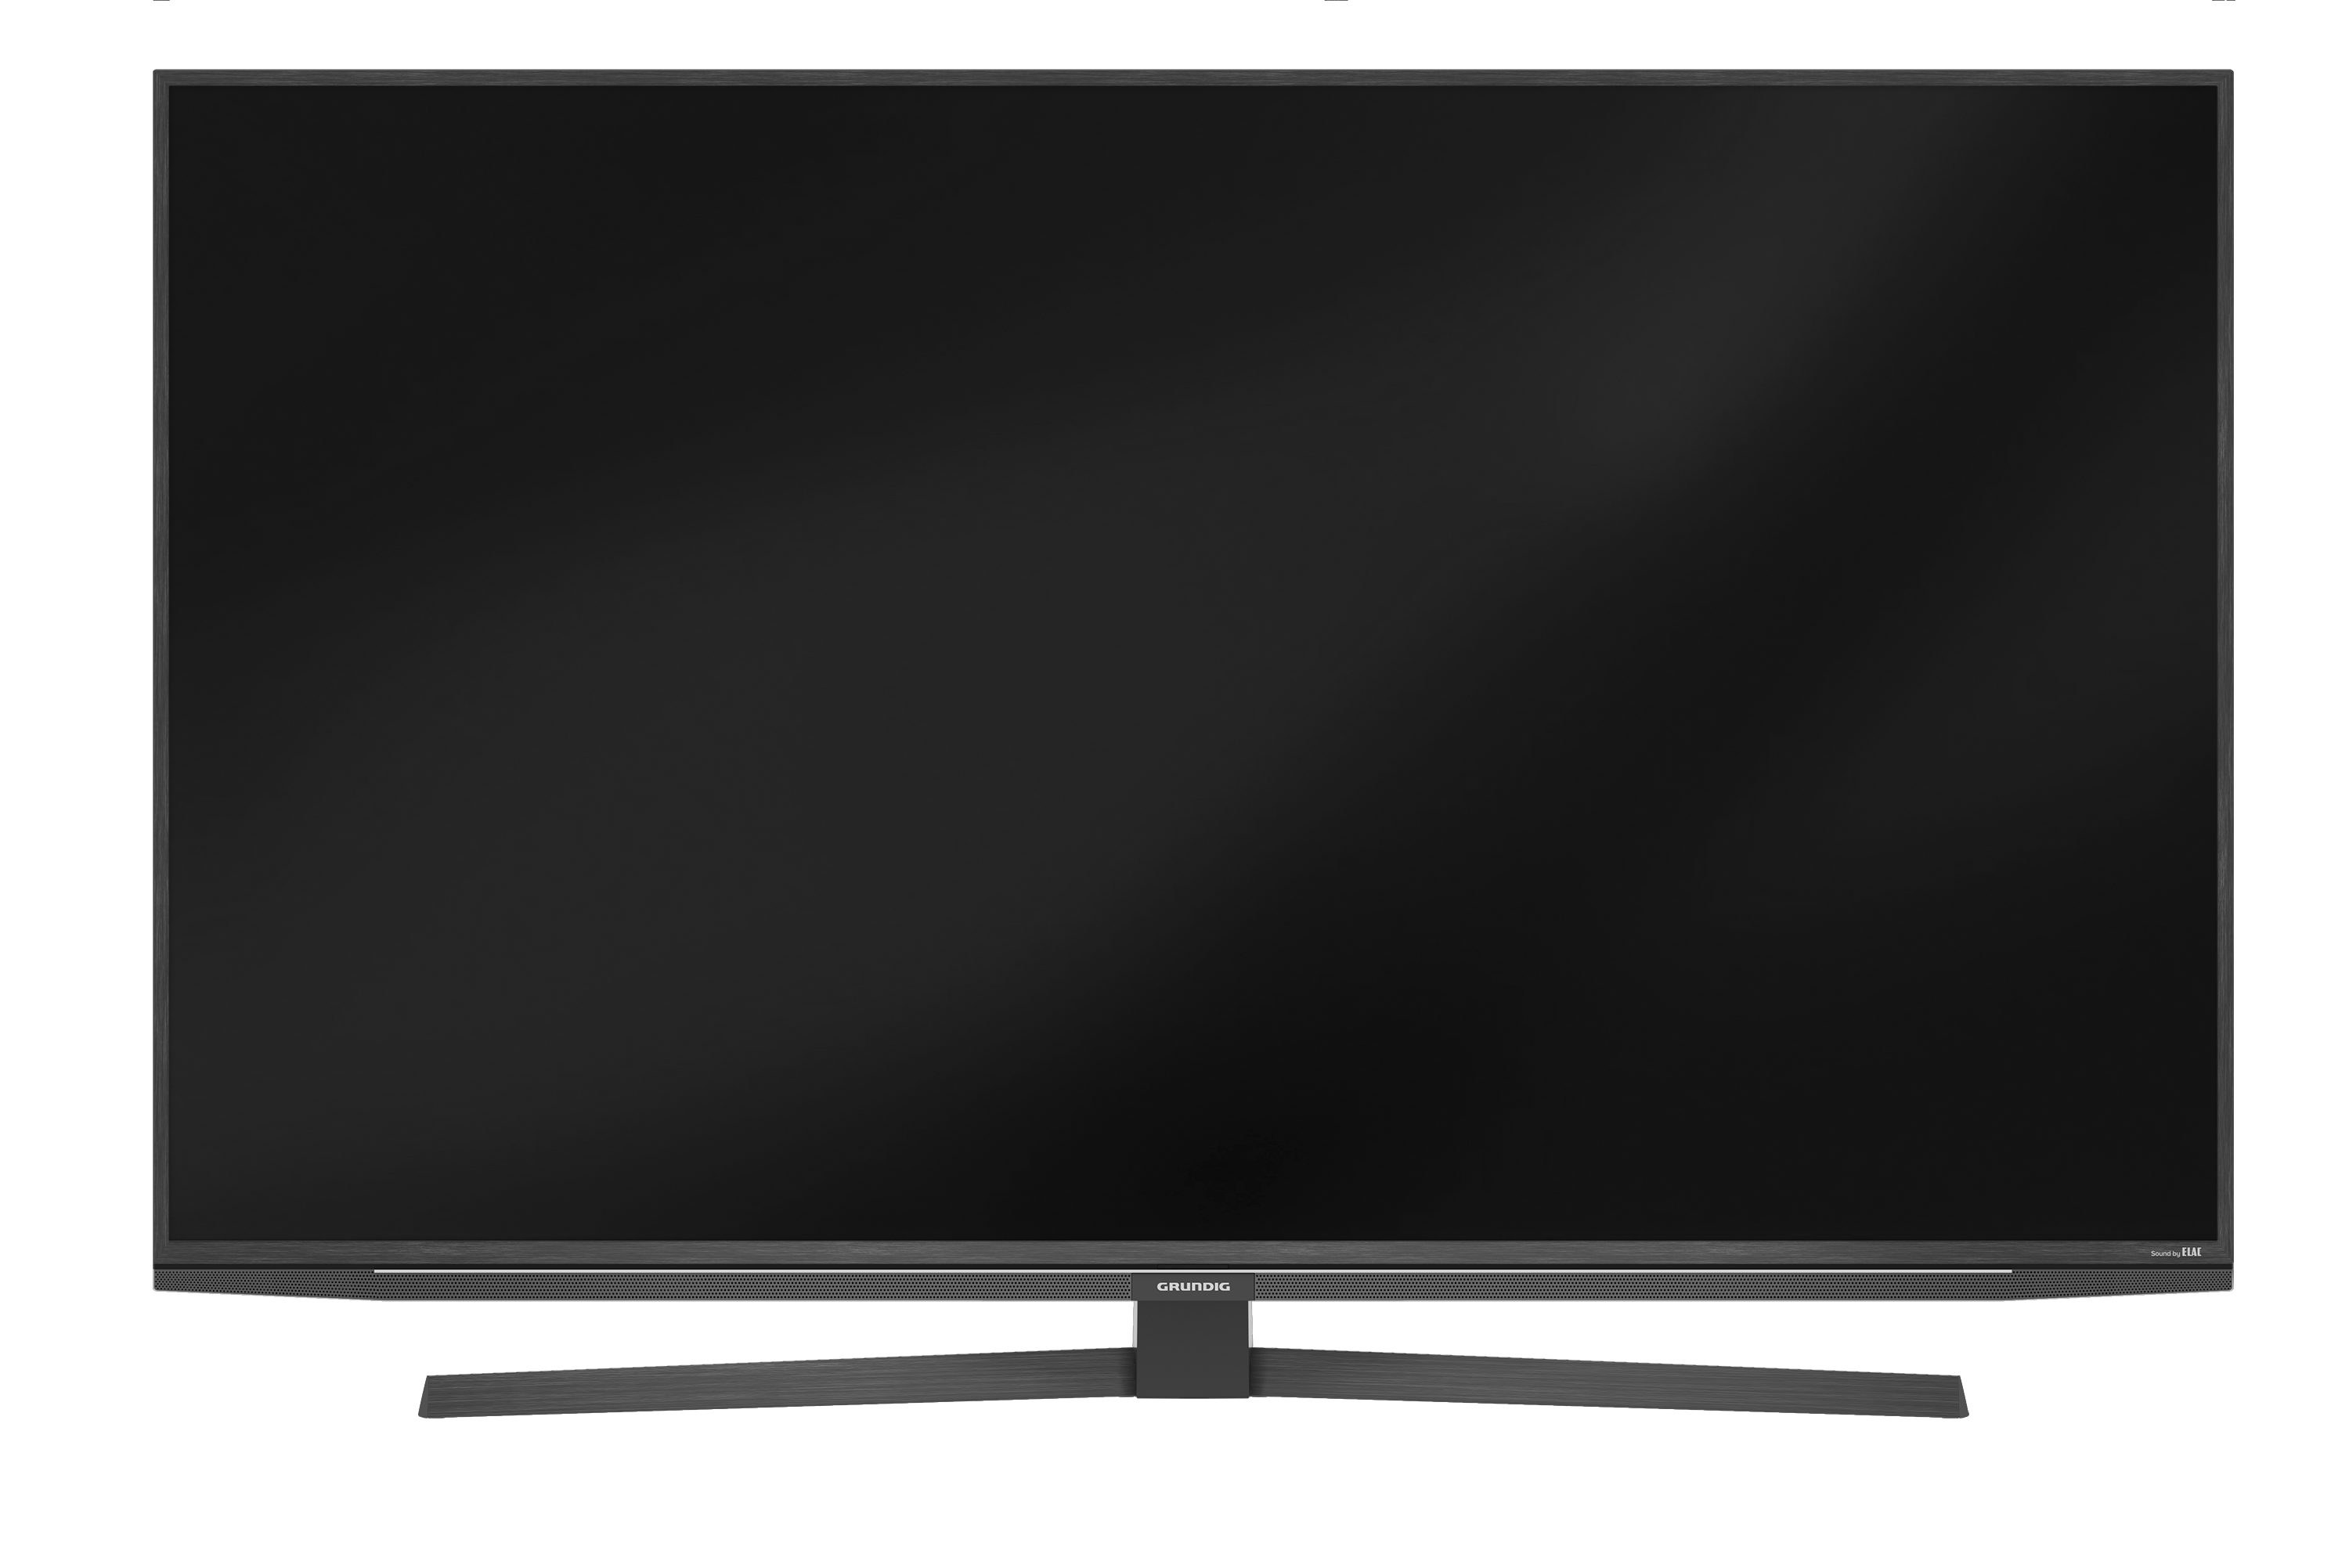 Grundig 49 GUA 8100 Manhattan UNU000 LED-Fernseher (49 Zoll, Smart-TV,  Micro Dimming Engine, HDR, Live Share, Sound by ELAC) online kaufen | OTTO